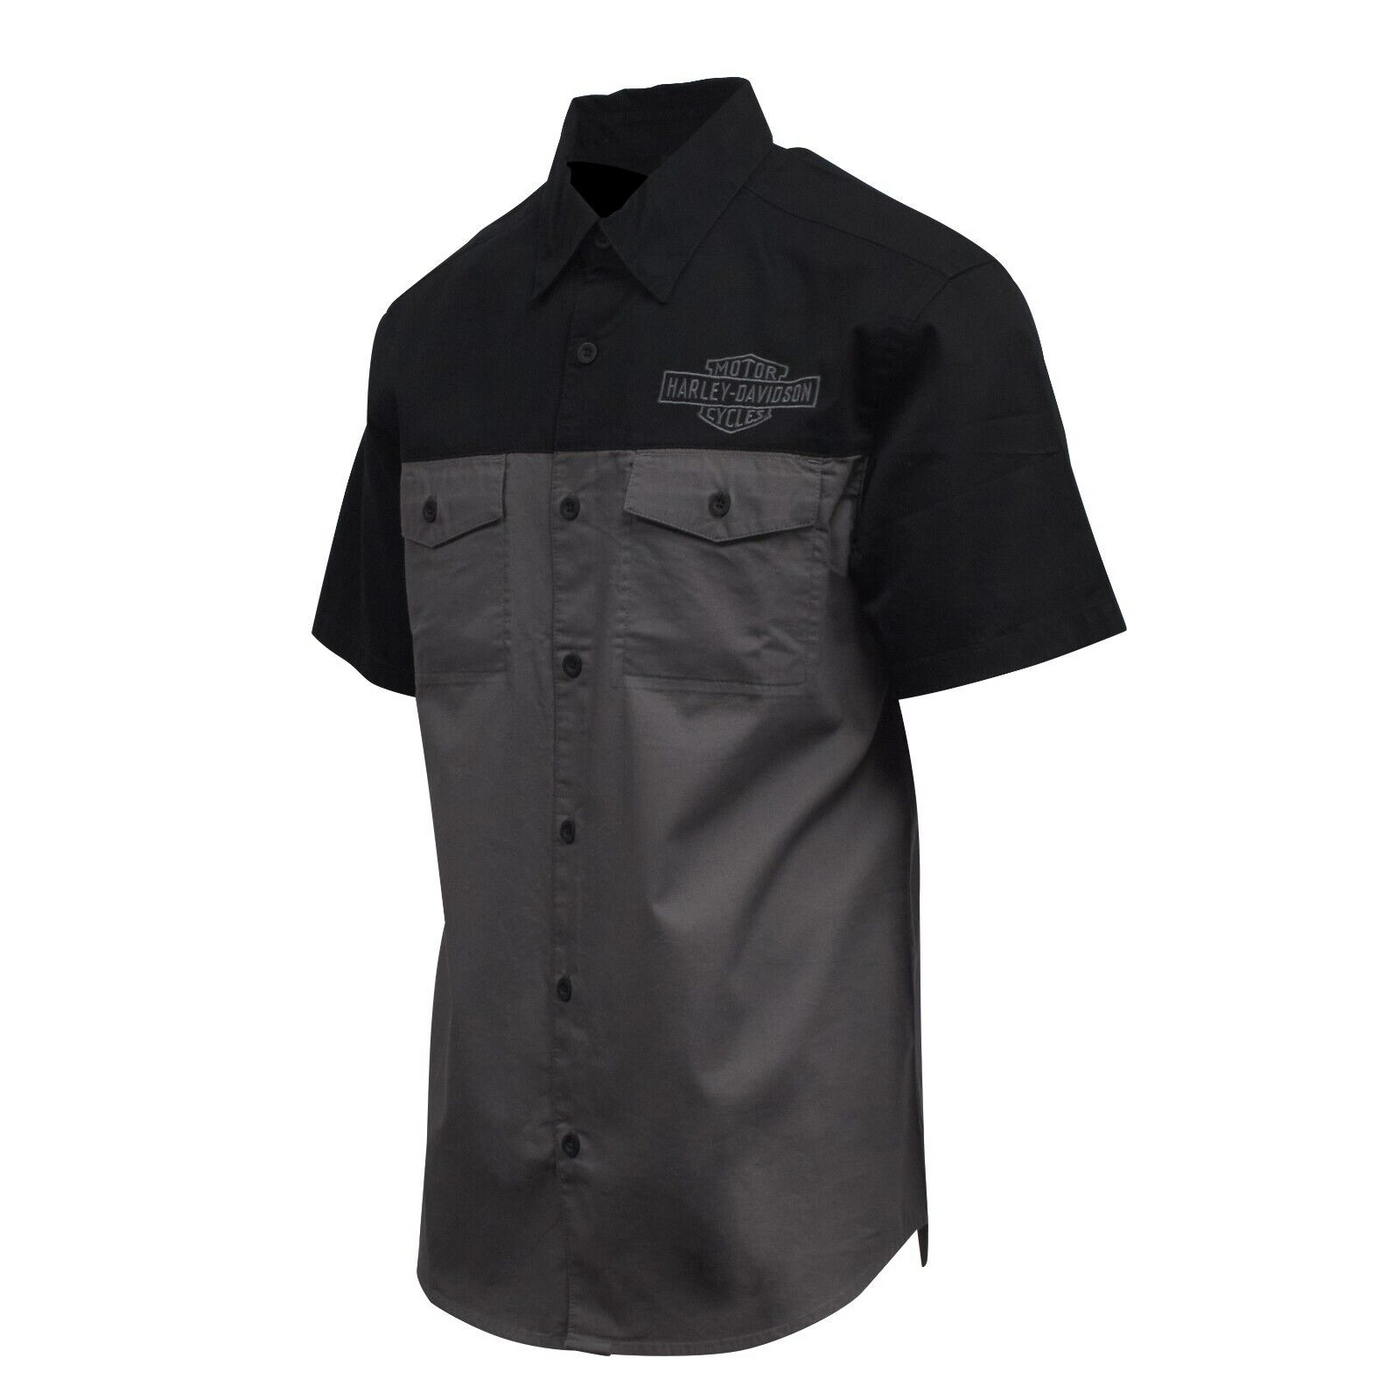 Harley-Davidson Men's Blackened Pearl Staple Colorblock S/S Woven Shirt (S50B)